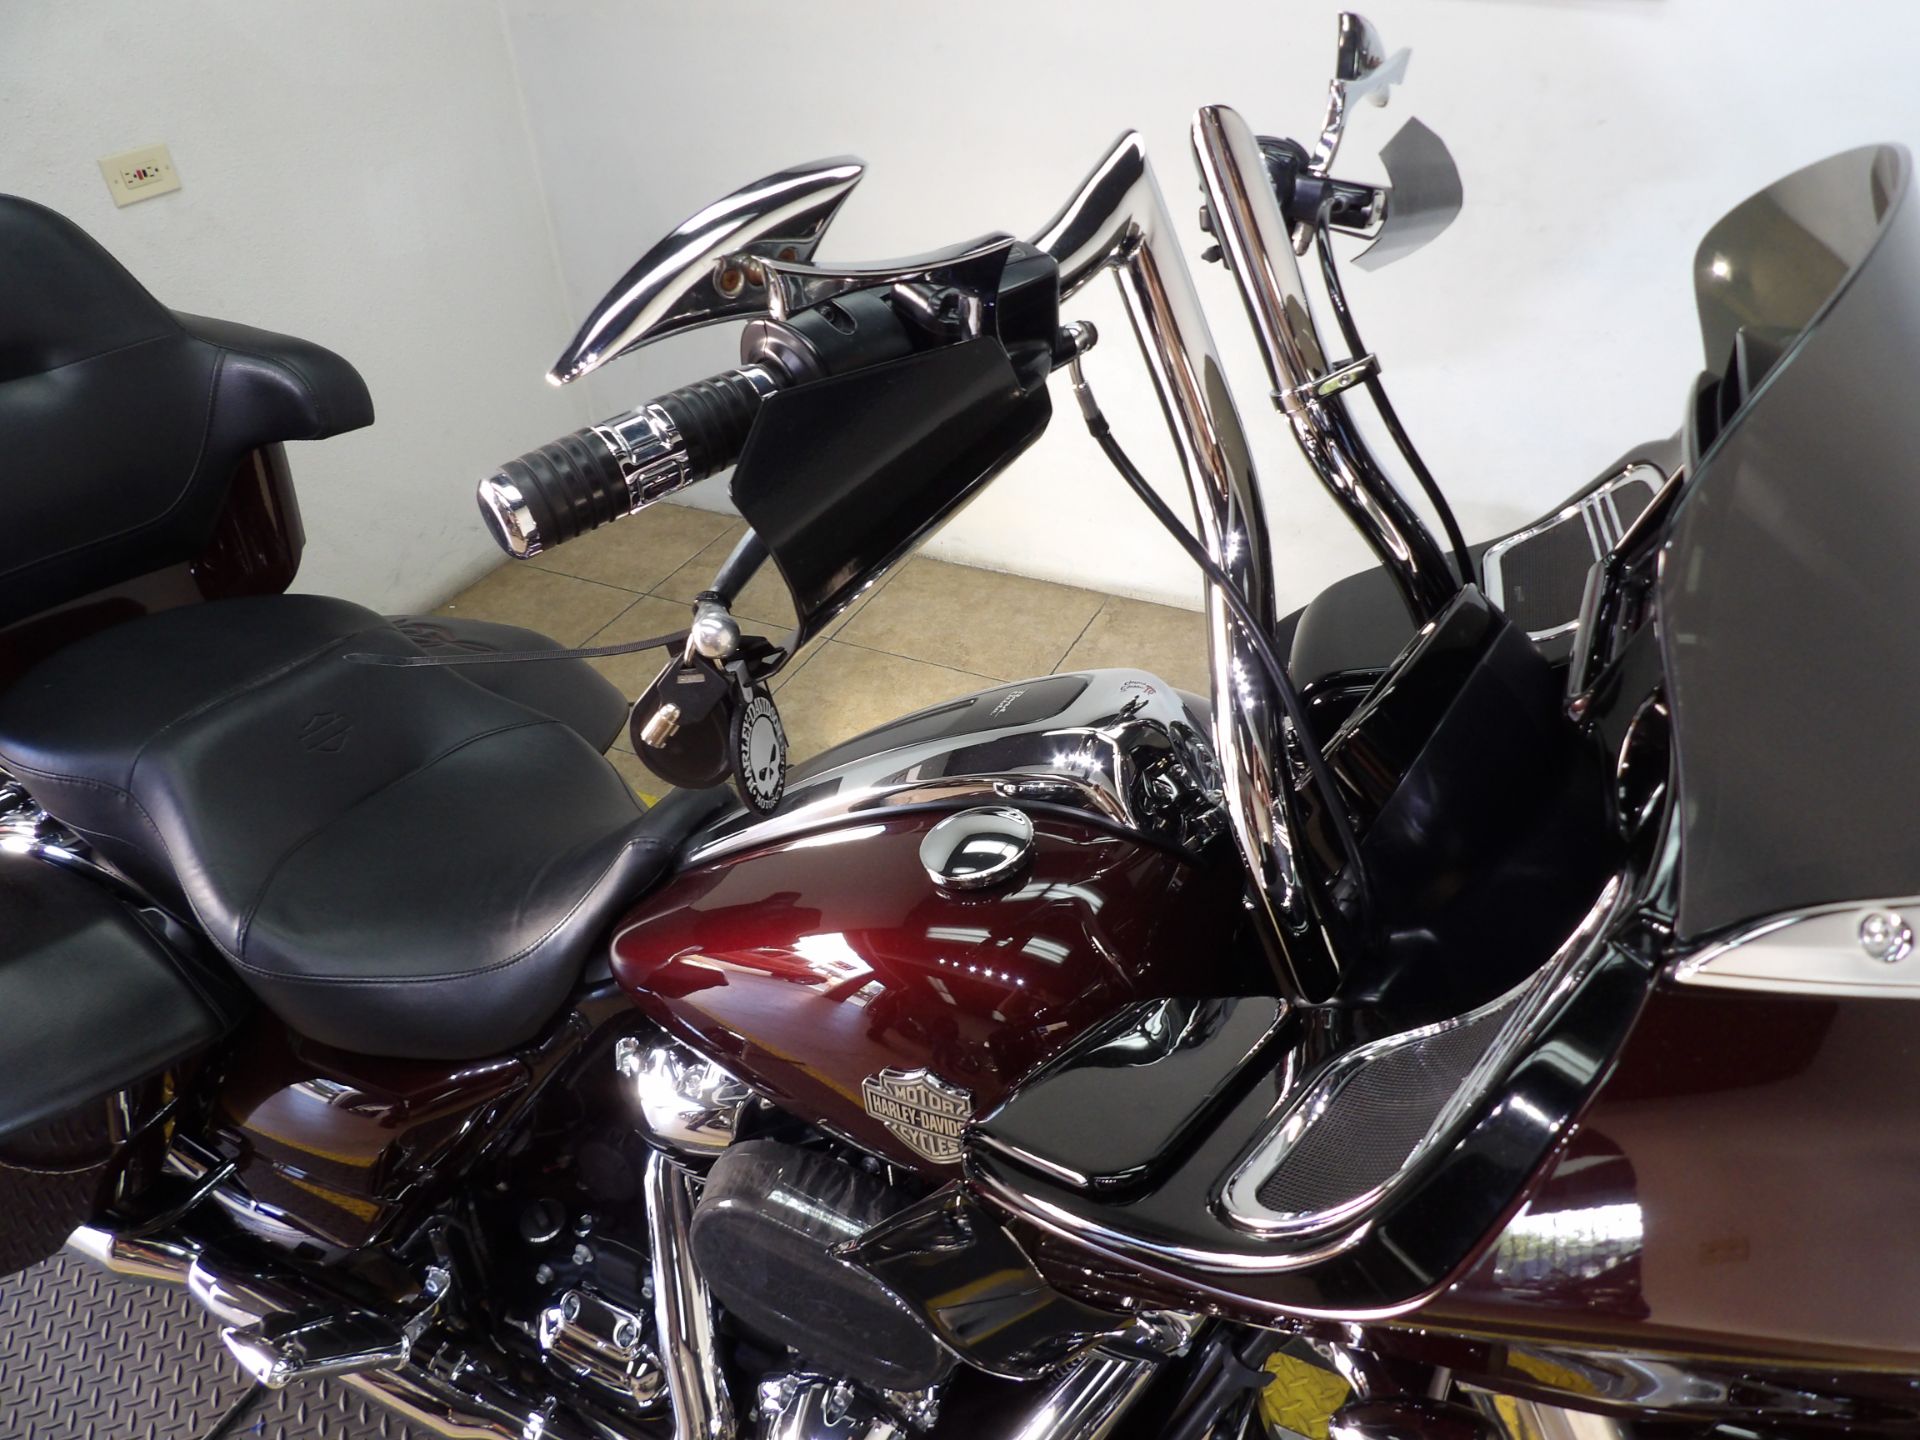 2021 Harley-Davidson Road Glide® Special in Temecula, California - Photo 24